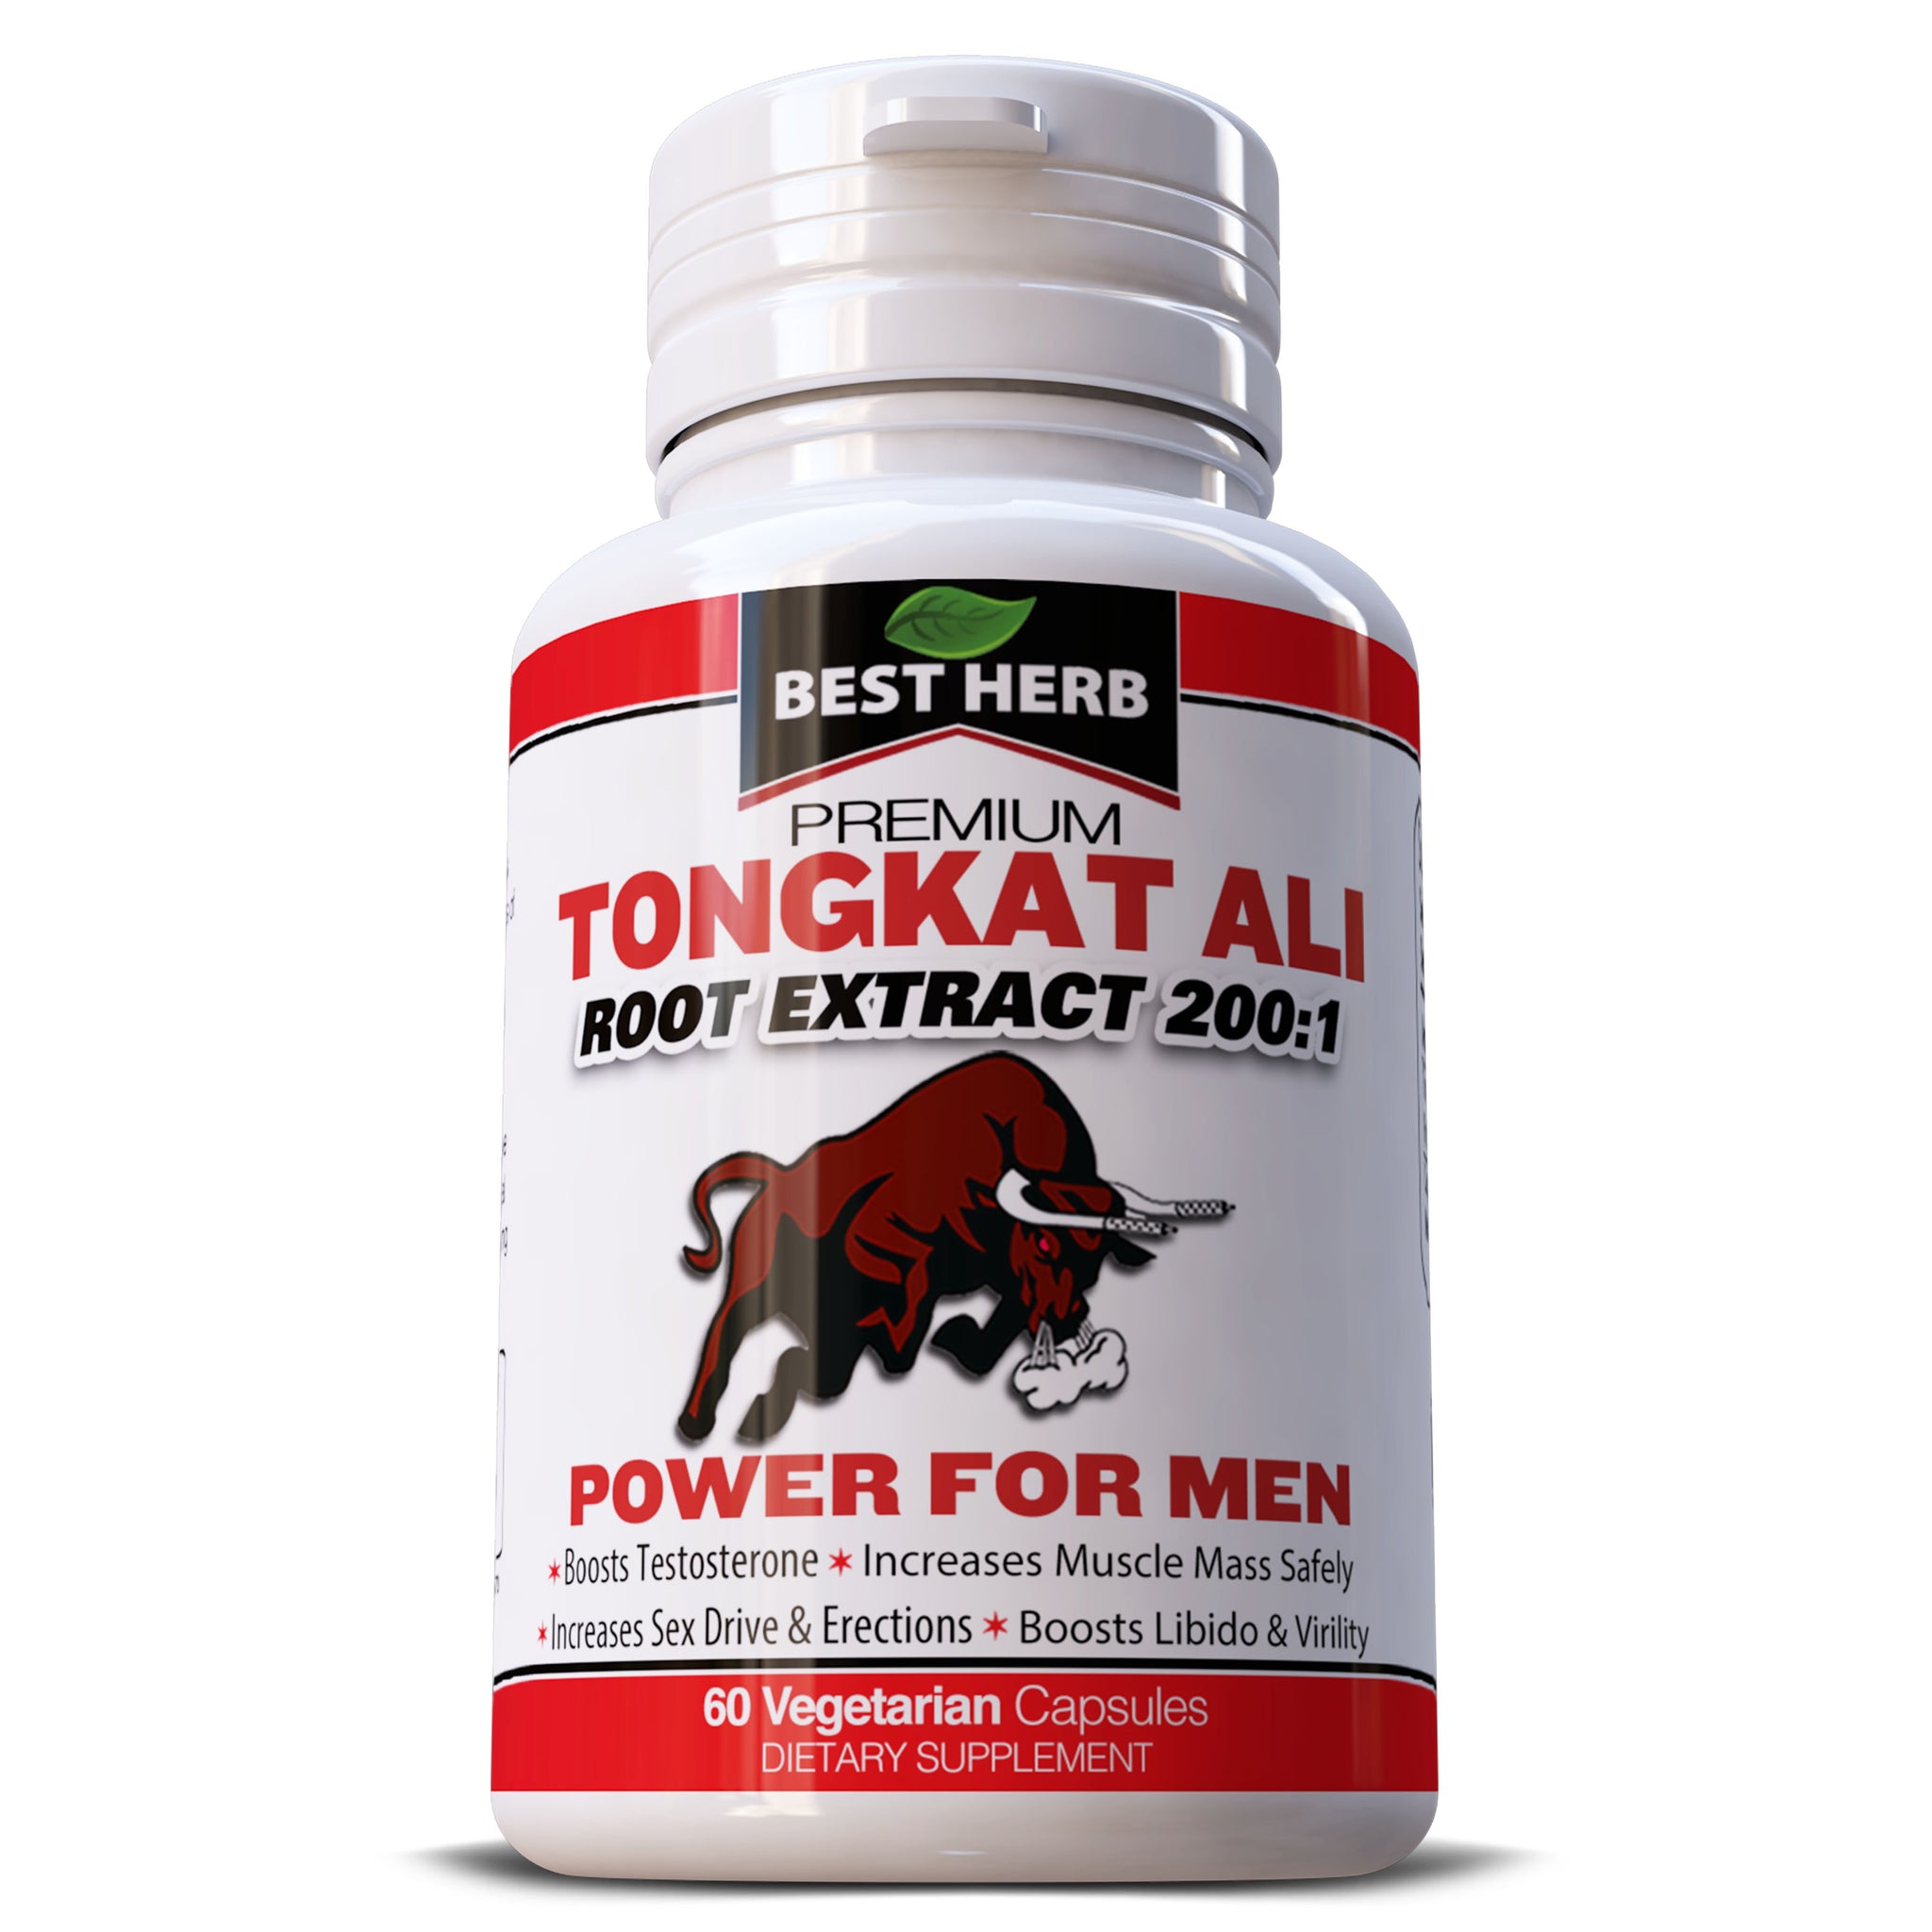 Tongkat Ali Grade A 2001 Root Extract Longjack Best Herb Capsules Purestherbal 1098